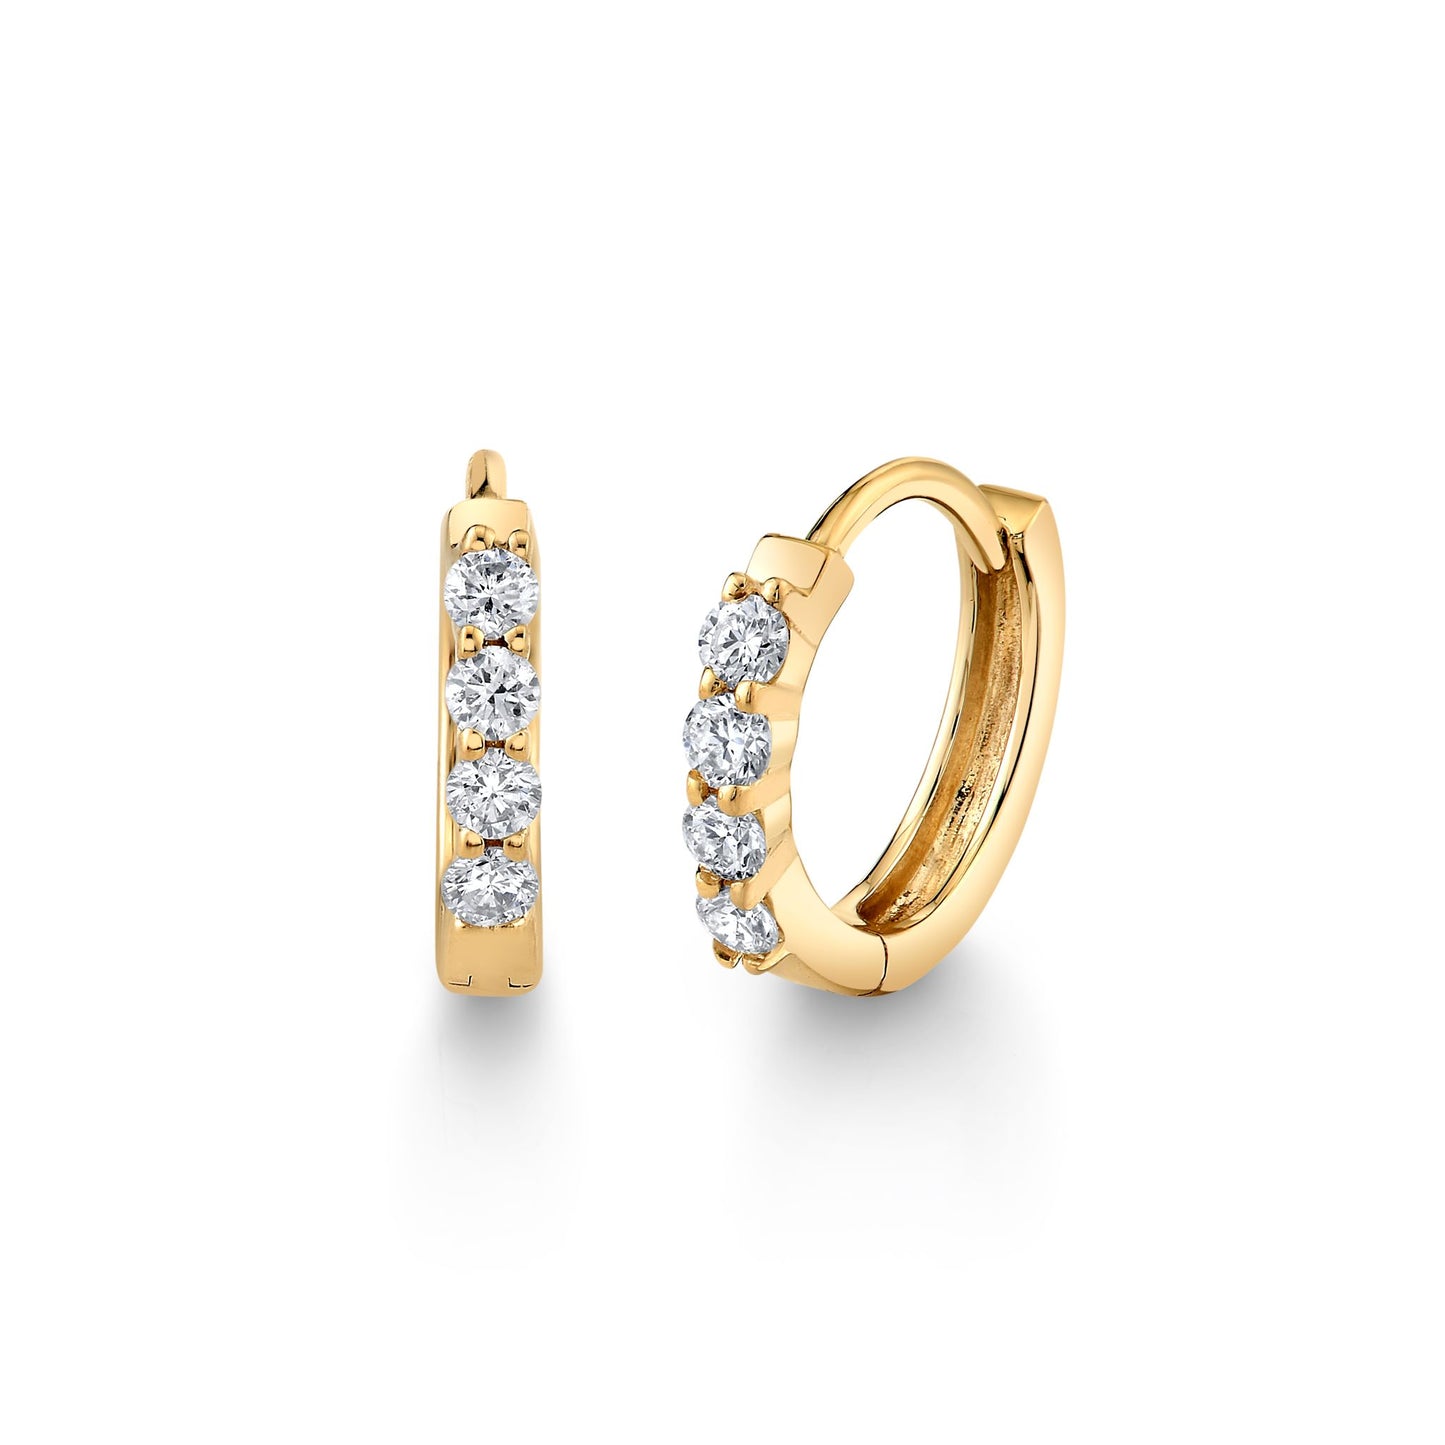 Petite Diamond Huggie Earrings in 14K Gold